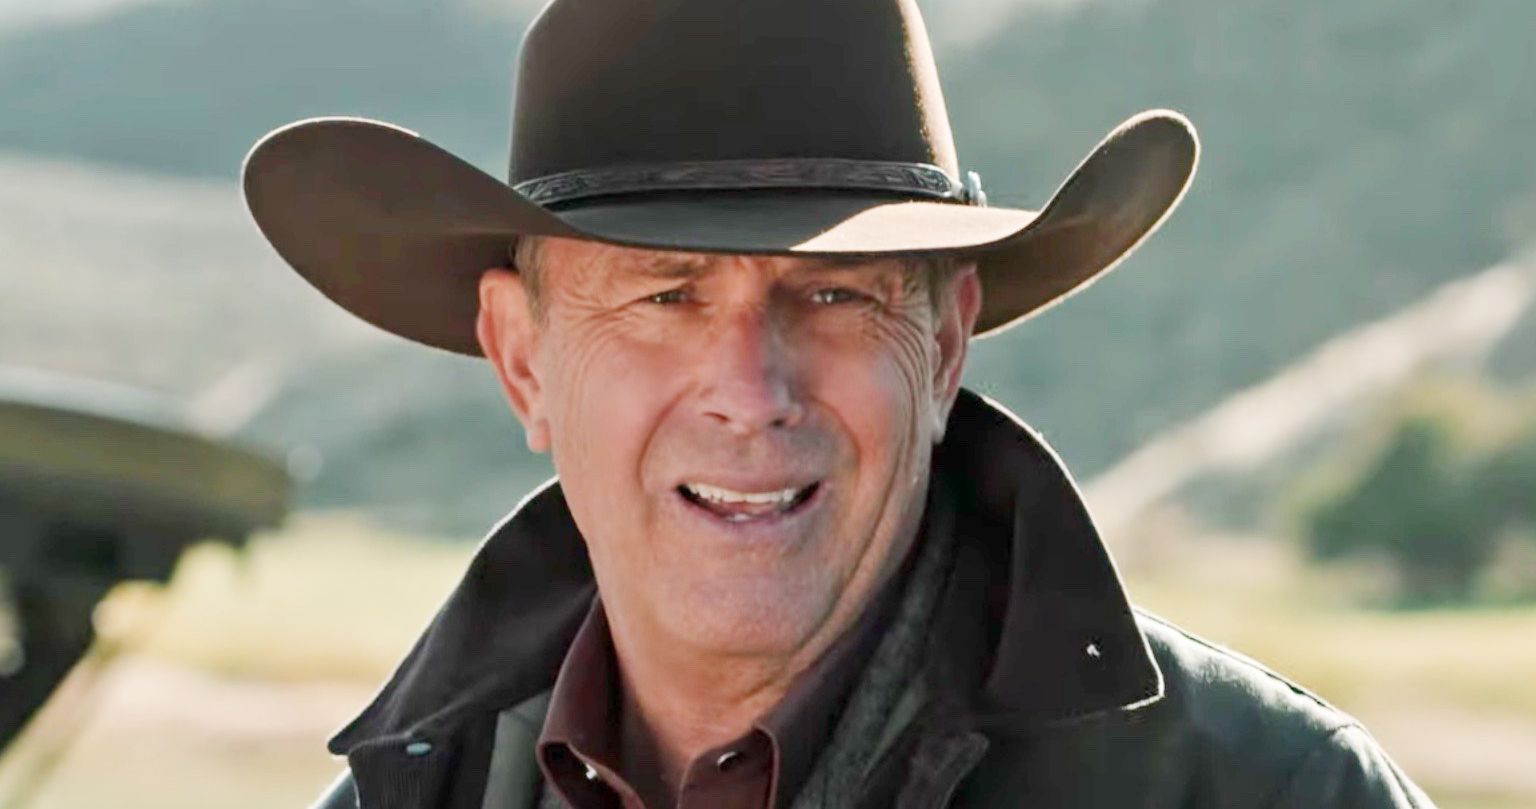 Full Yellowstone Season 4 Trailer Arrives, Teasing John Dutton's Grisly Fate